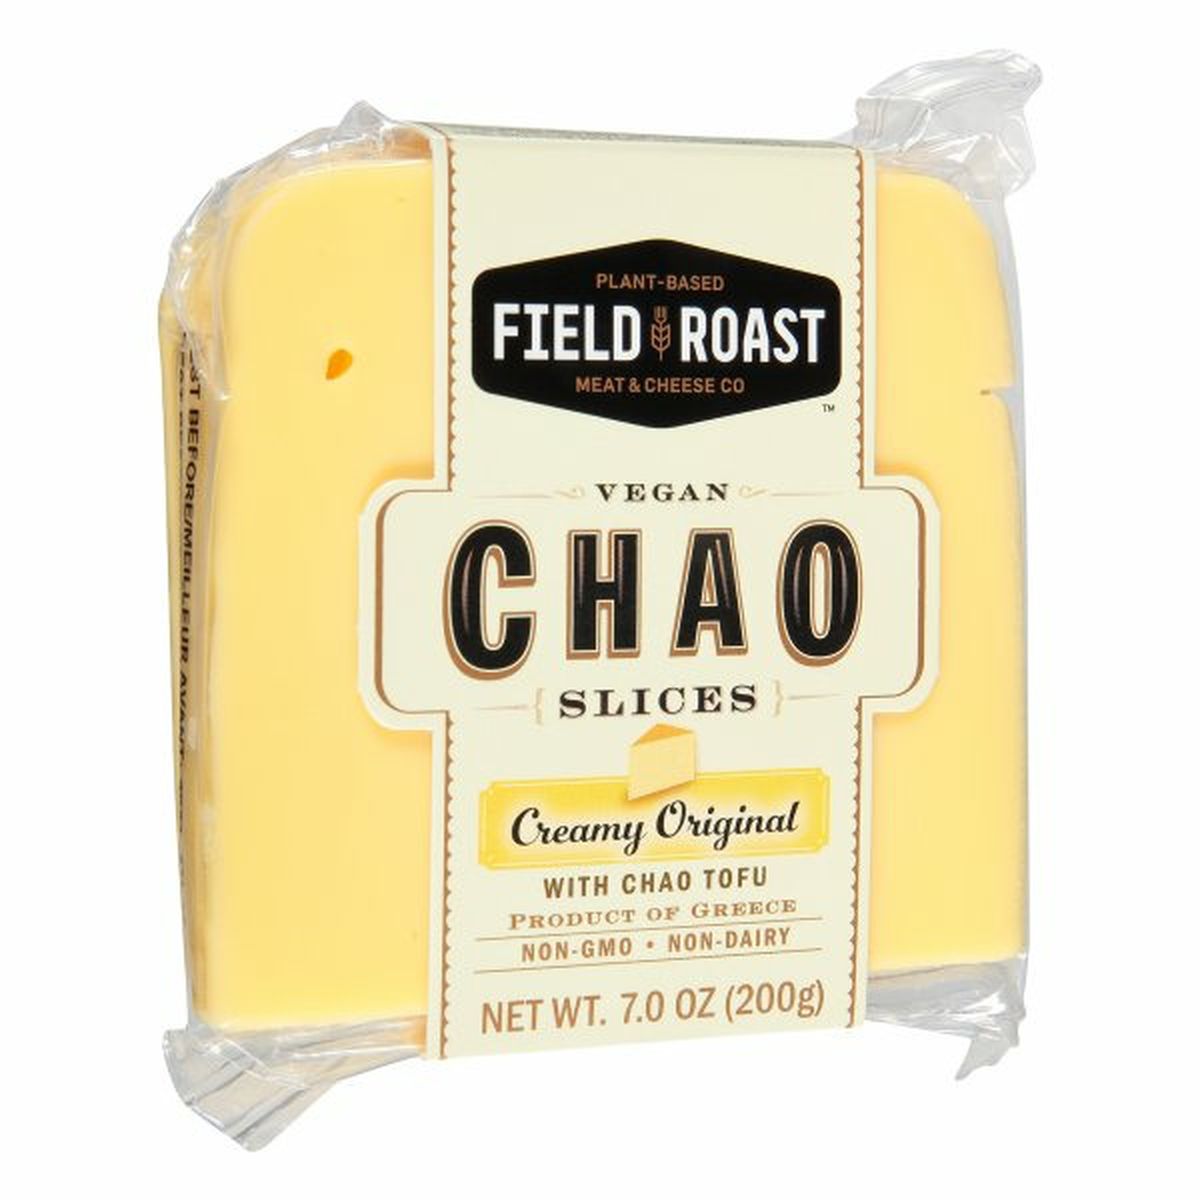 Calories in Field Roast Chao Slices, Vegan, Creamy Original